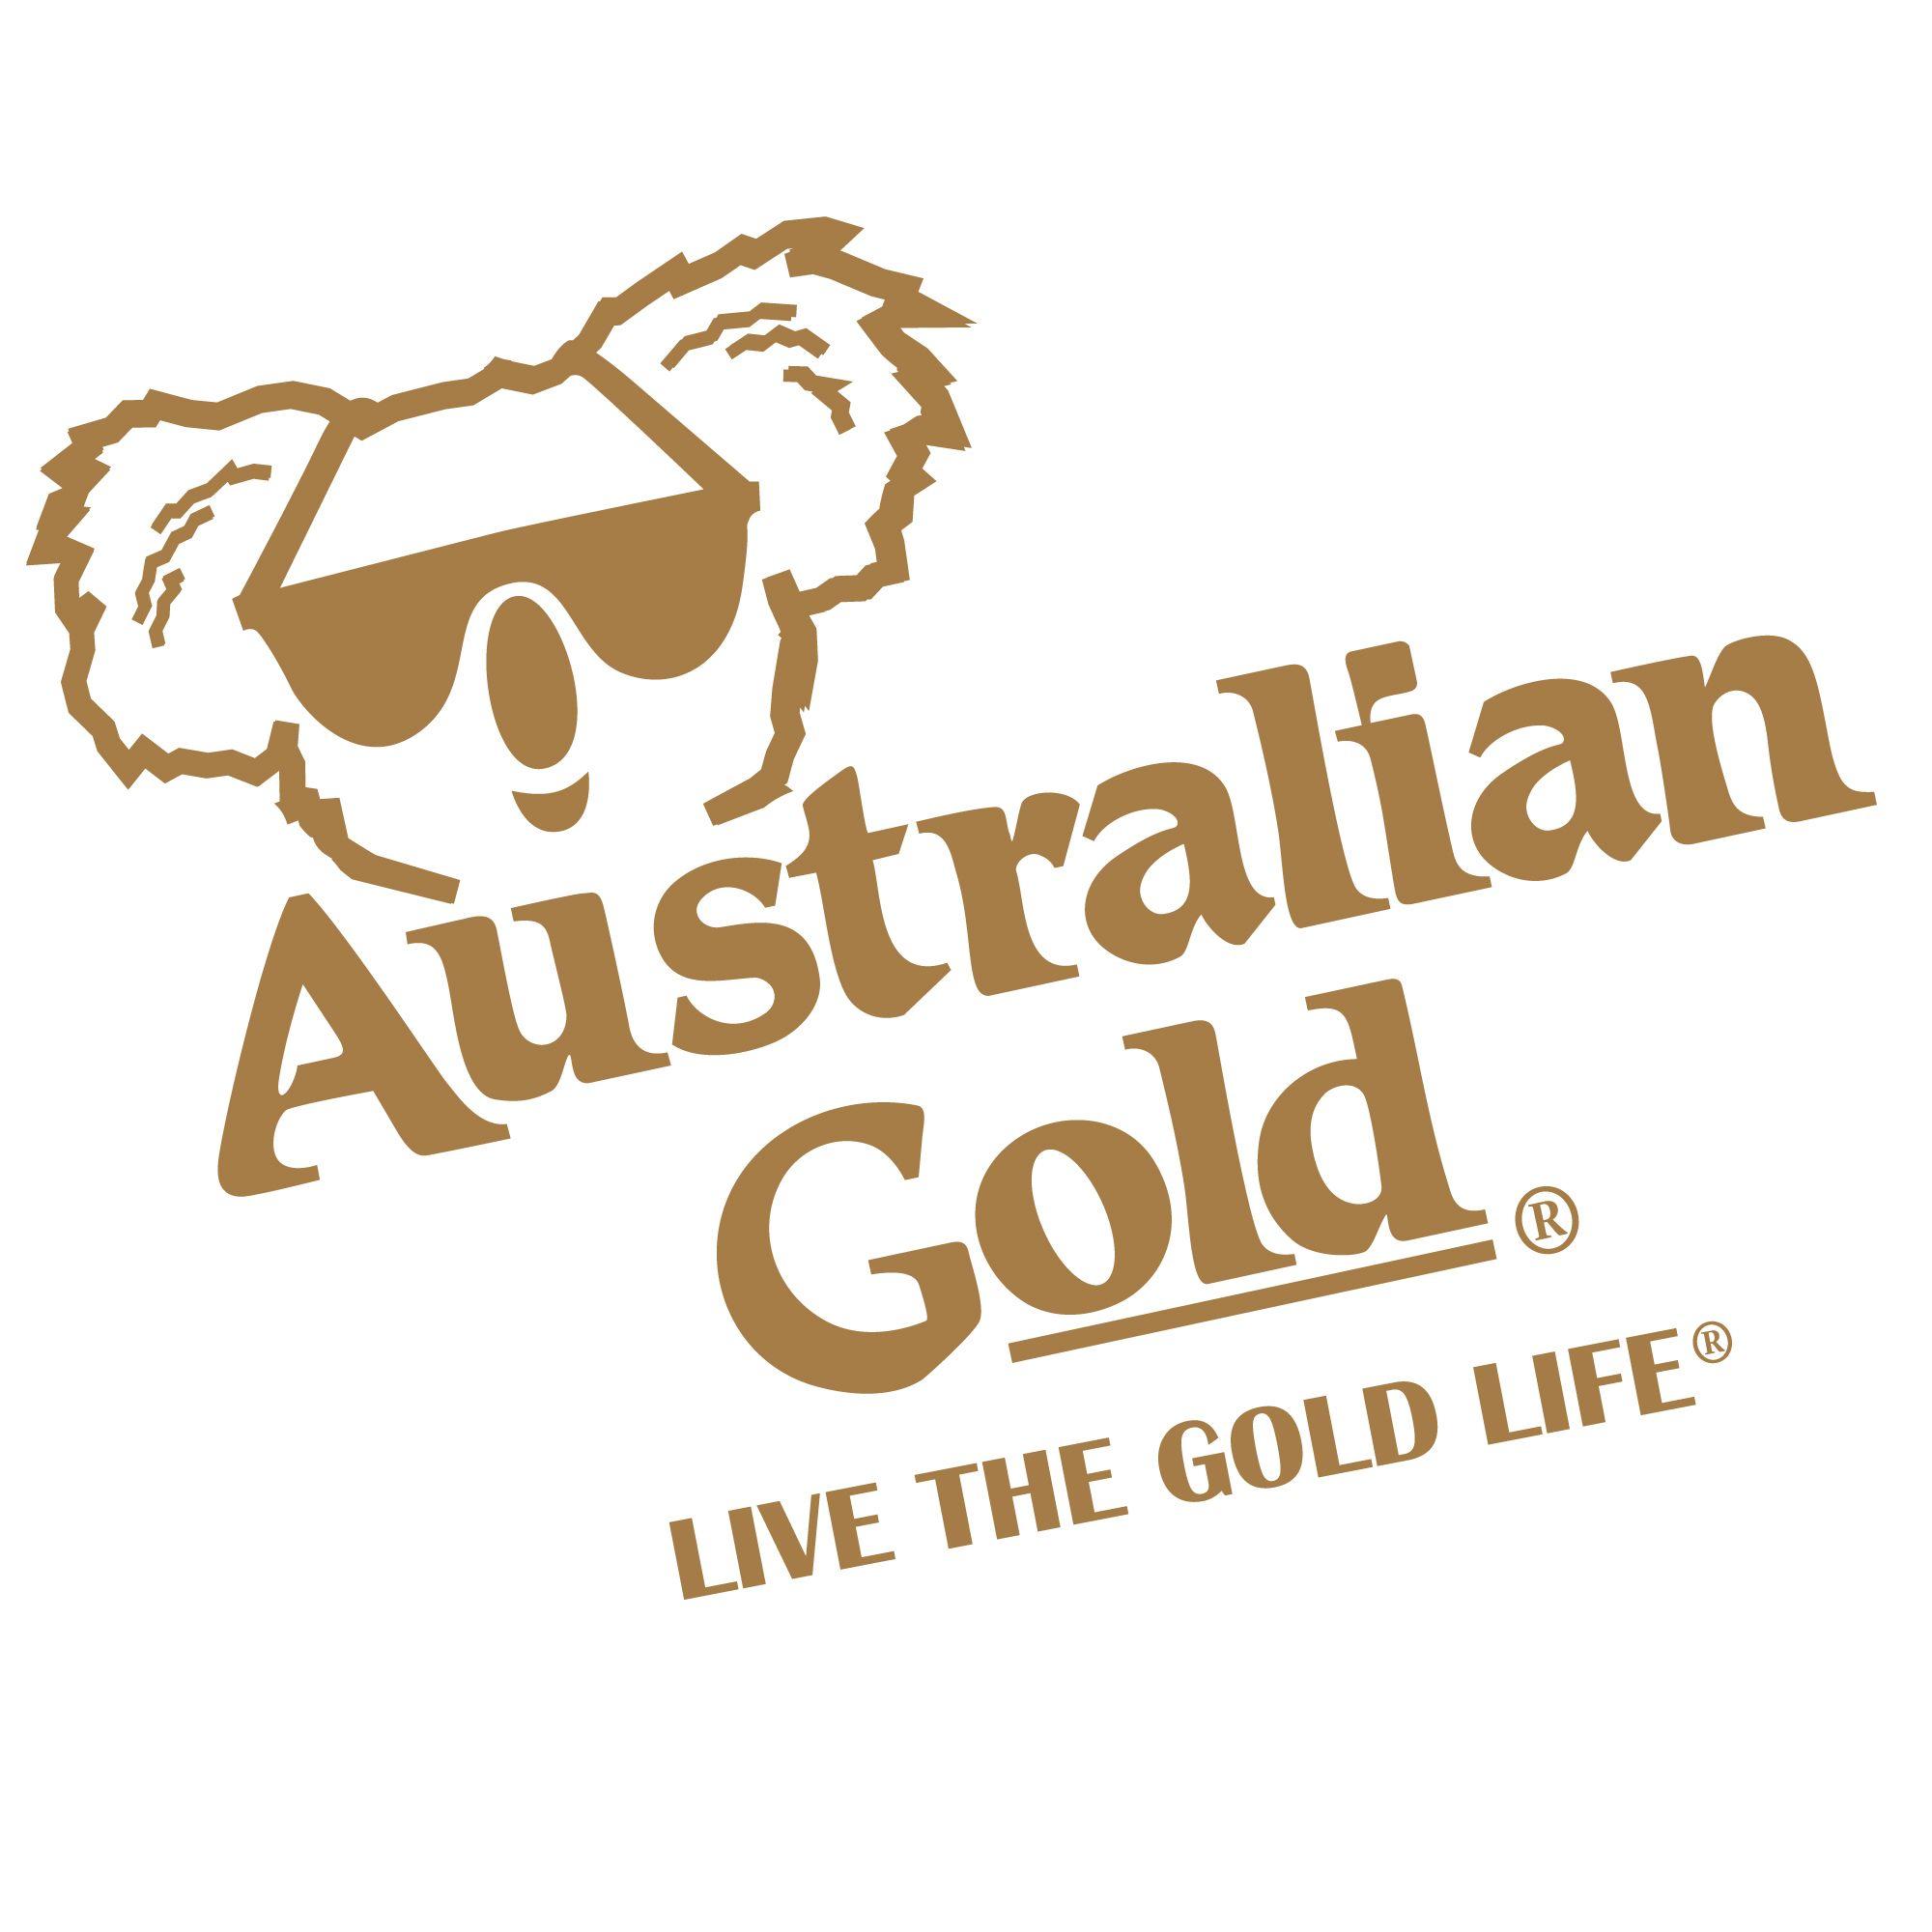 Australian Gold Logo - AUSTRALIAN GOLD